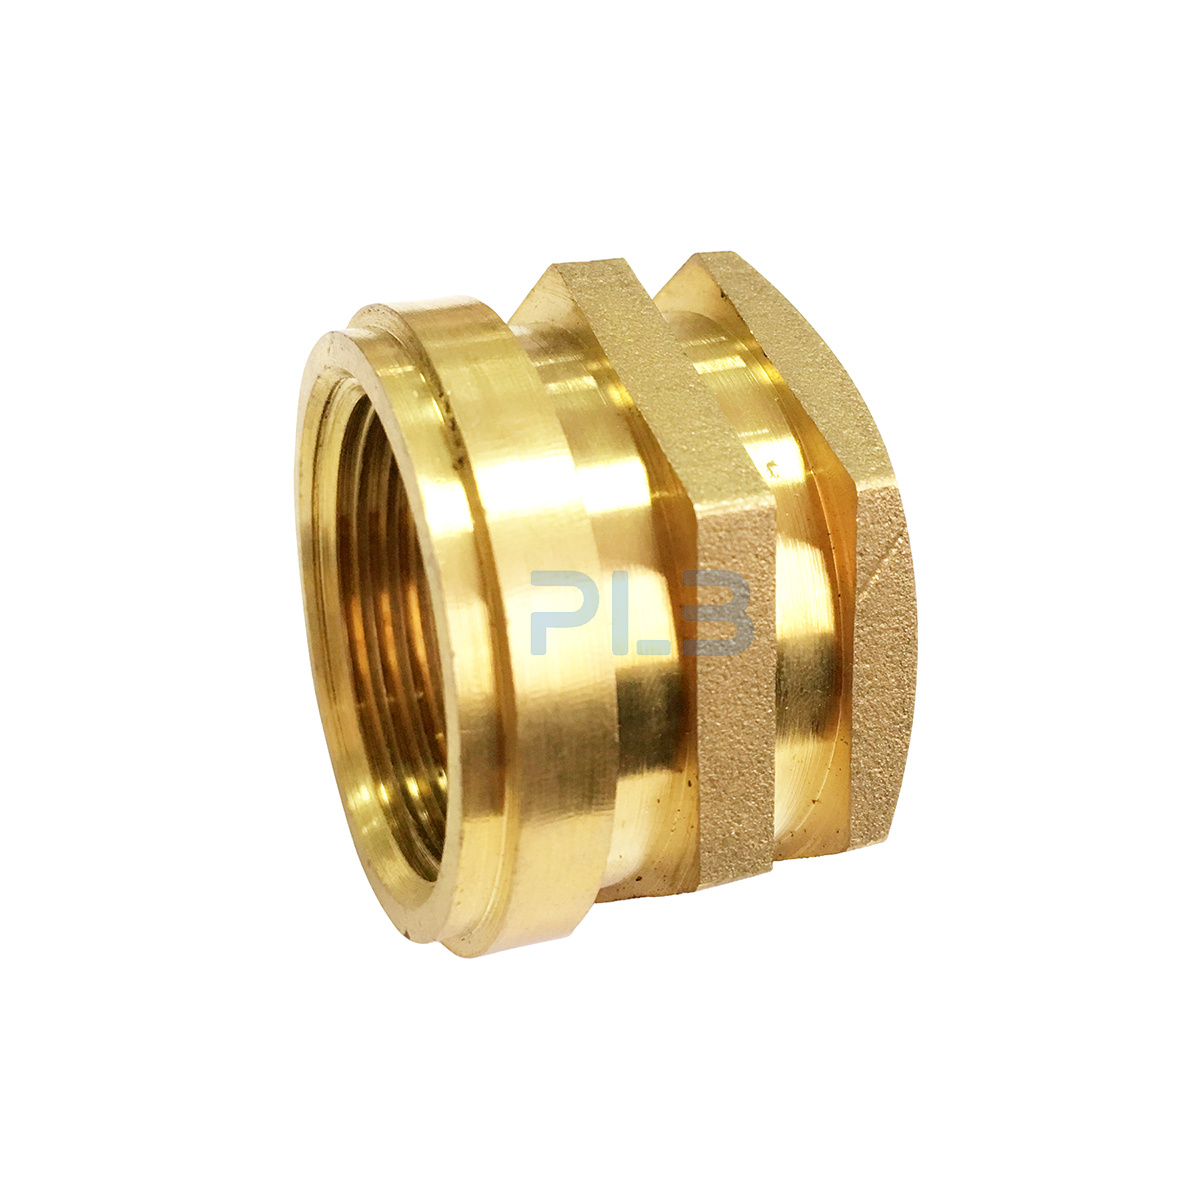 Brass PPR Fittings Brass PPR Inserts Factory